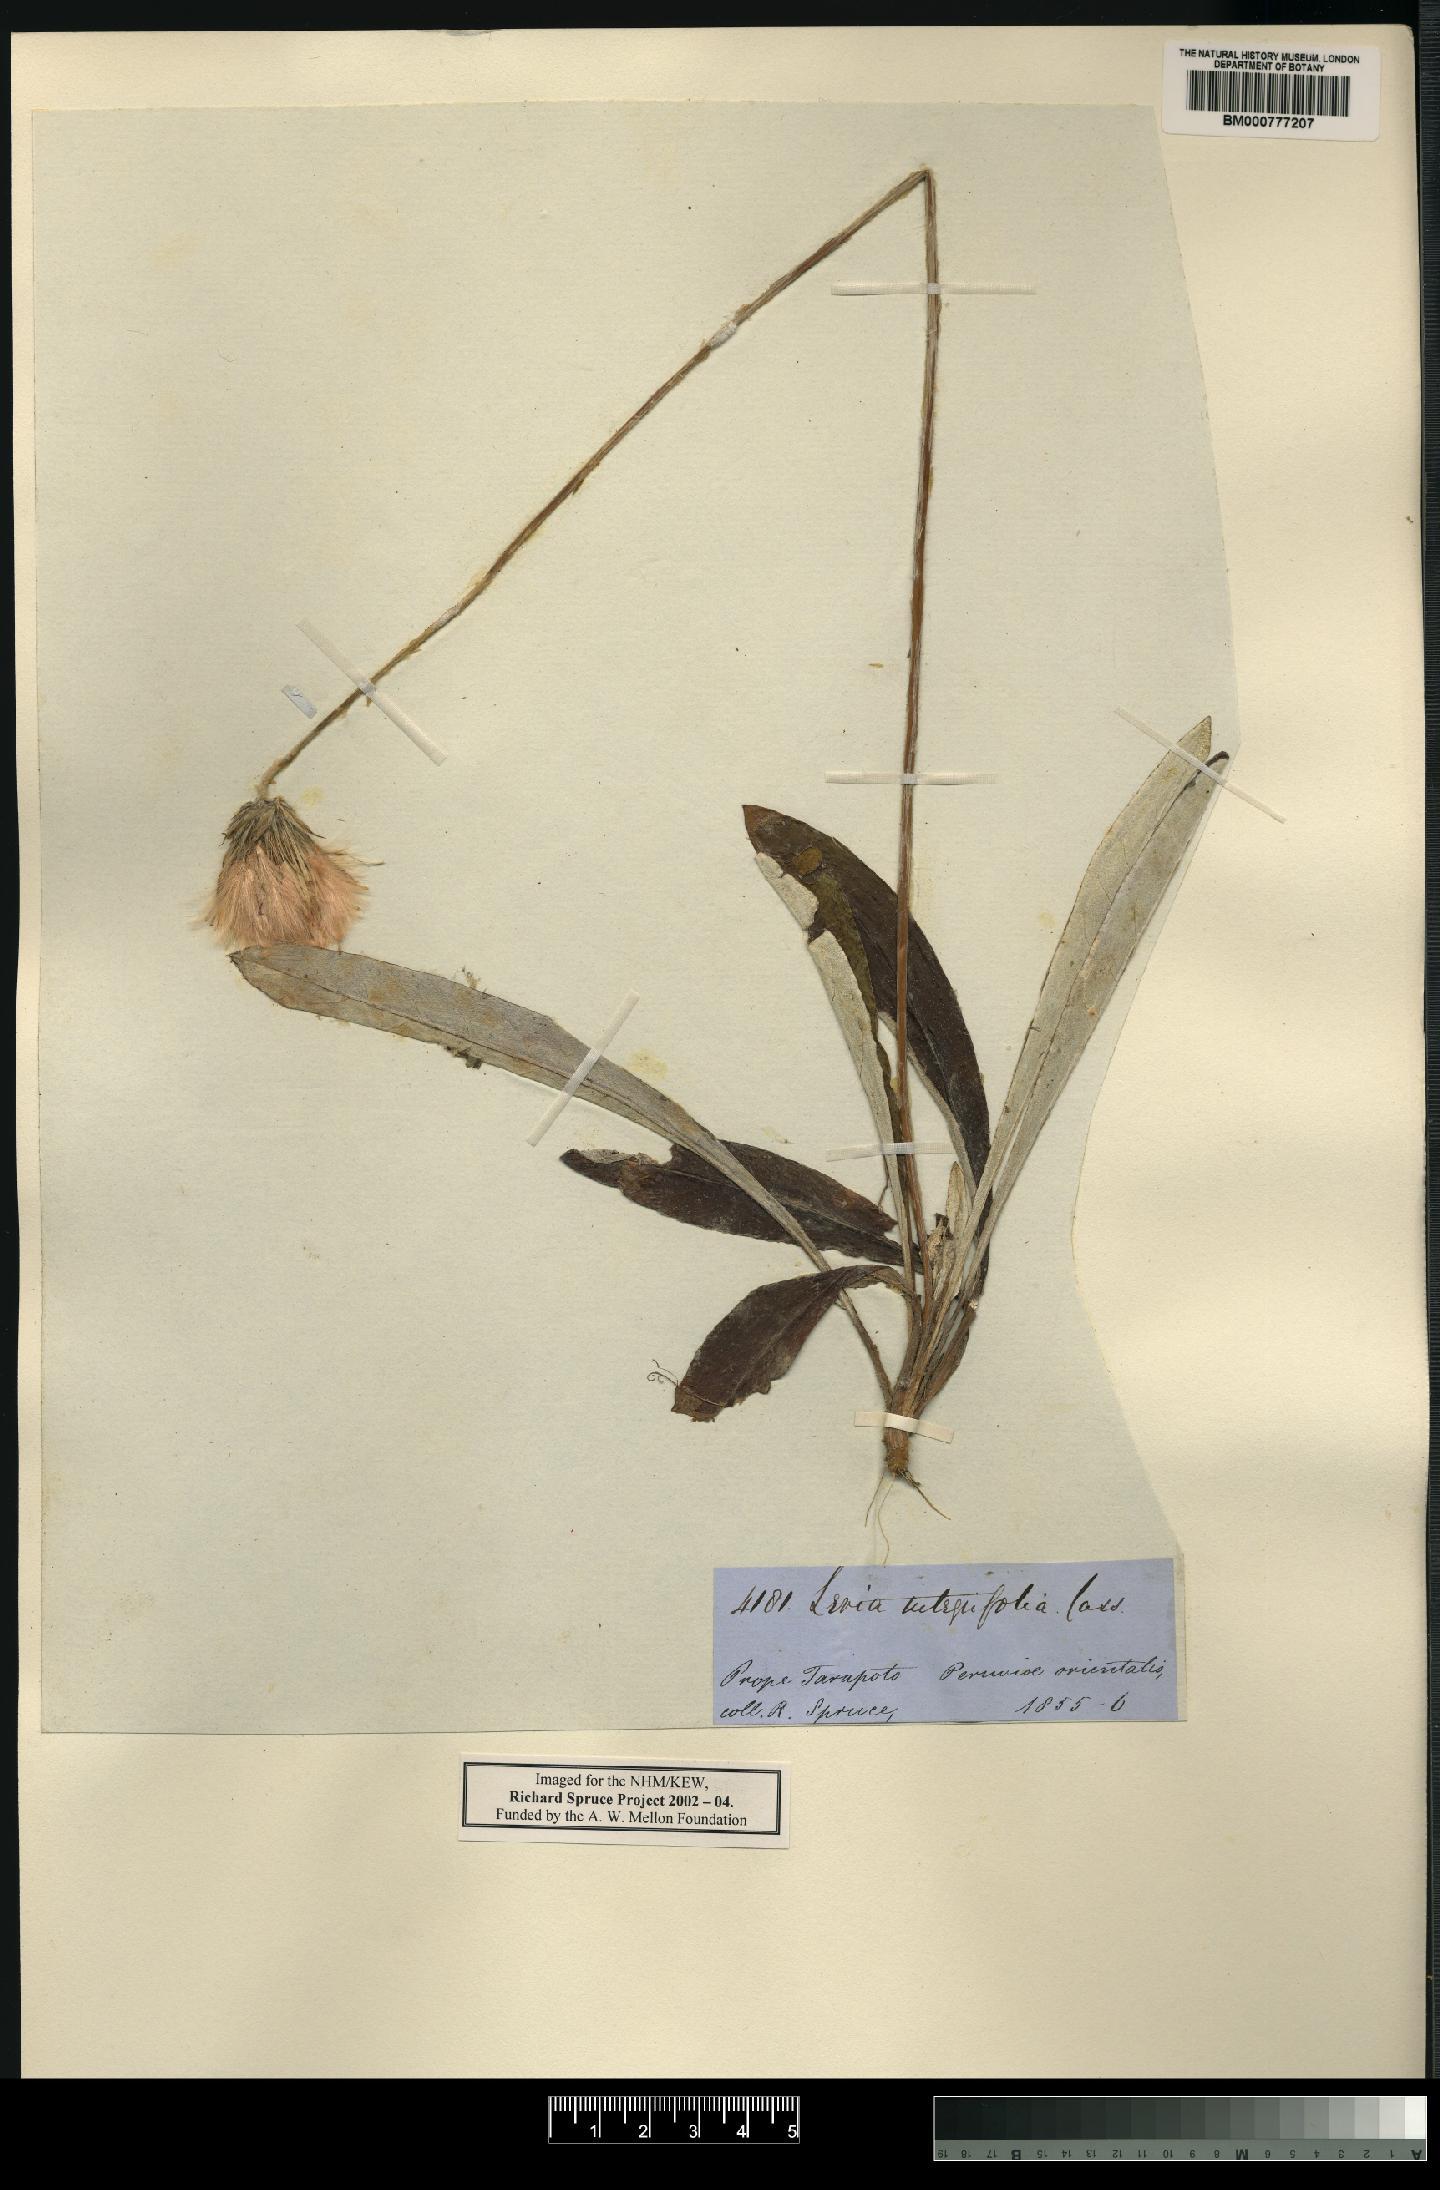 To NHMUK collection (Leria integrifolia Cass; NHMUK:ecatalogue:4676623)